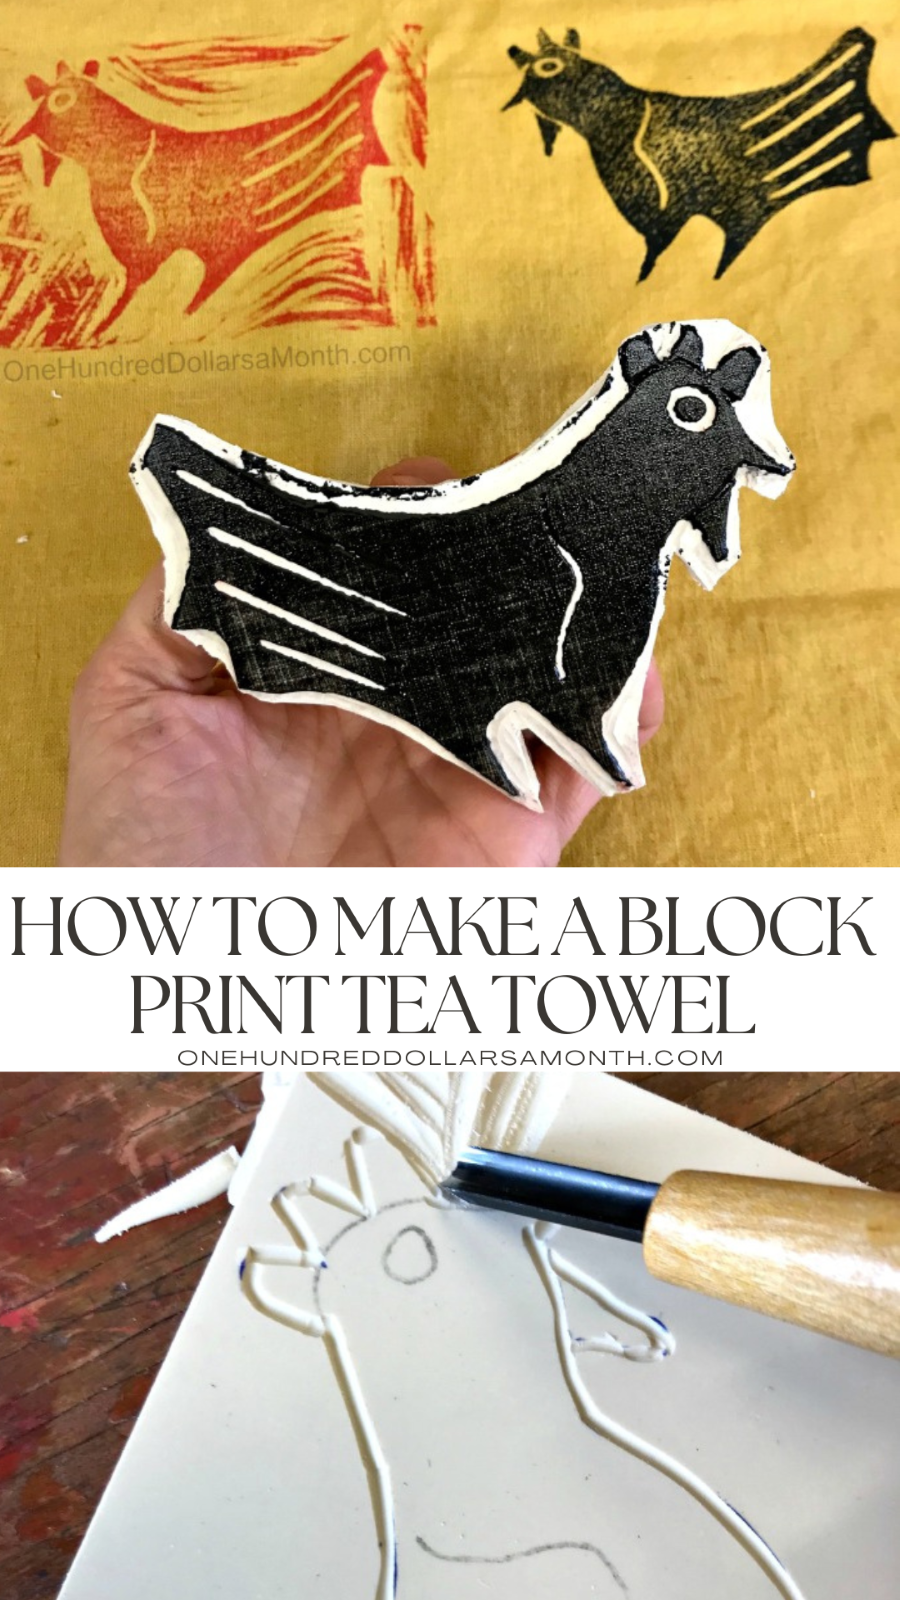 https://www.onehundreddollarsamonth.com/wp-content/uploads/2019/11/How-to-Make-a-Block-Print-Tea-Towel.png